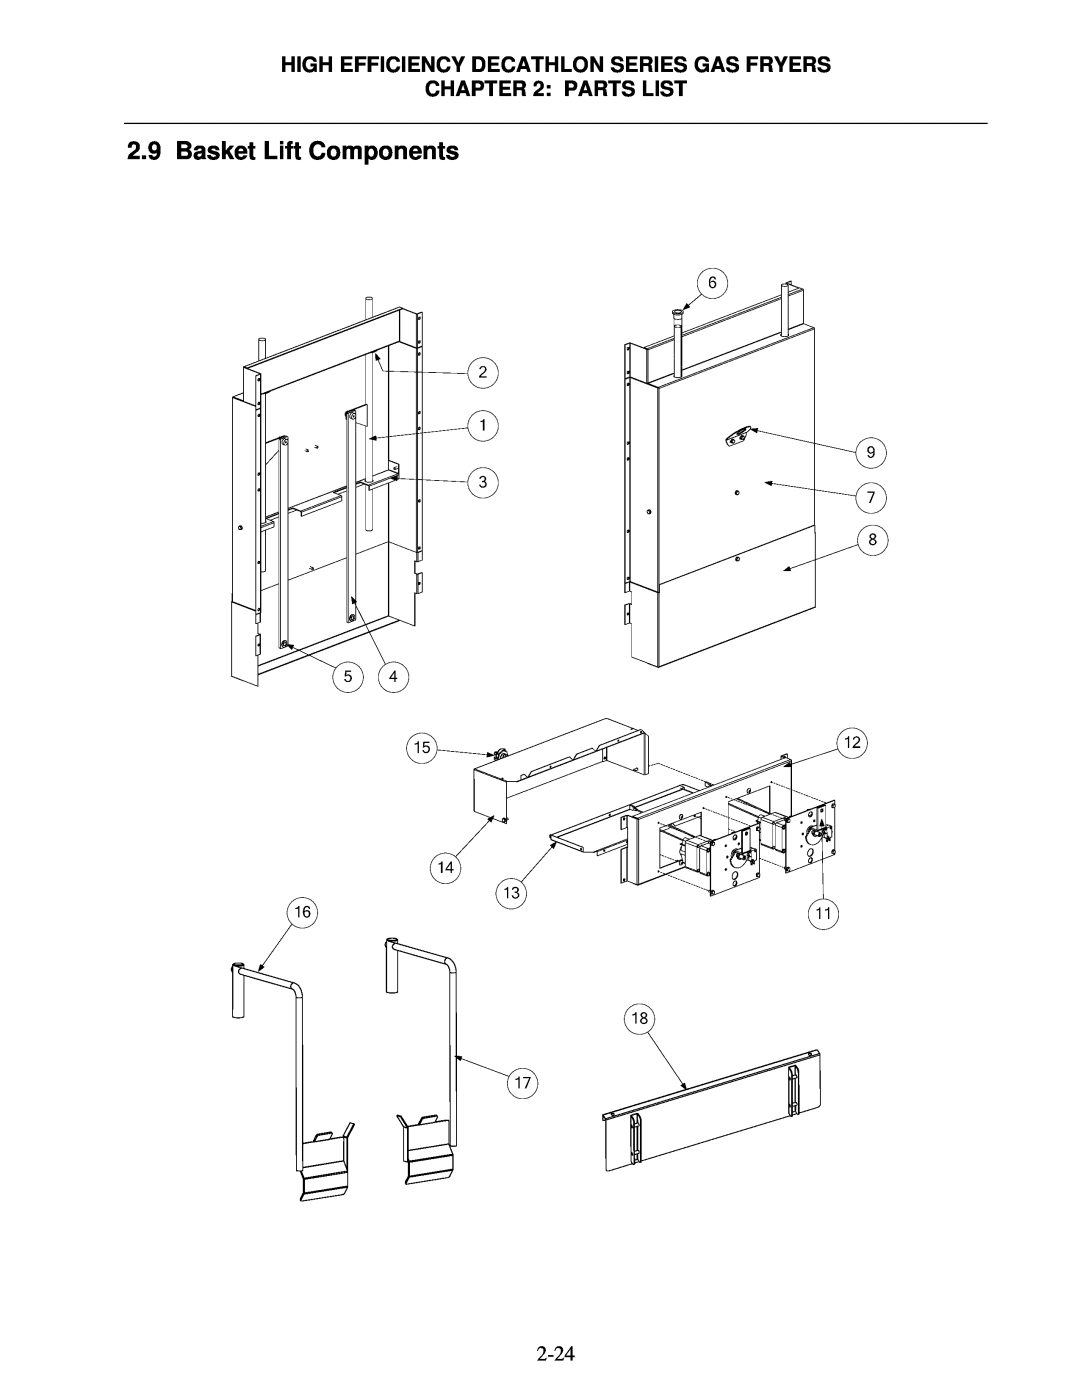 Frymaster FPHD manual Basket Lift Components, High Efficiency Decathlon Series Gas Fryers, Parts List 